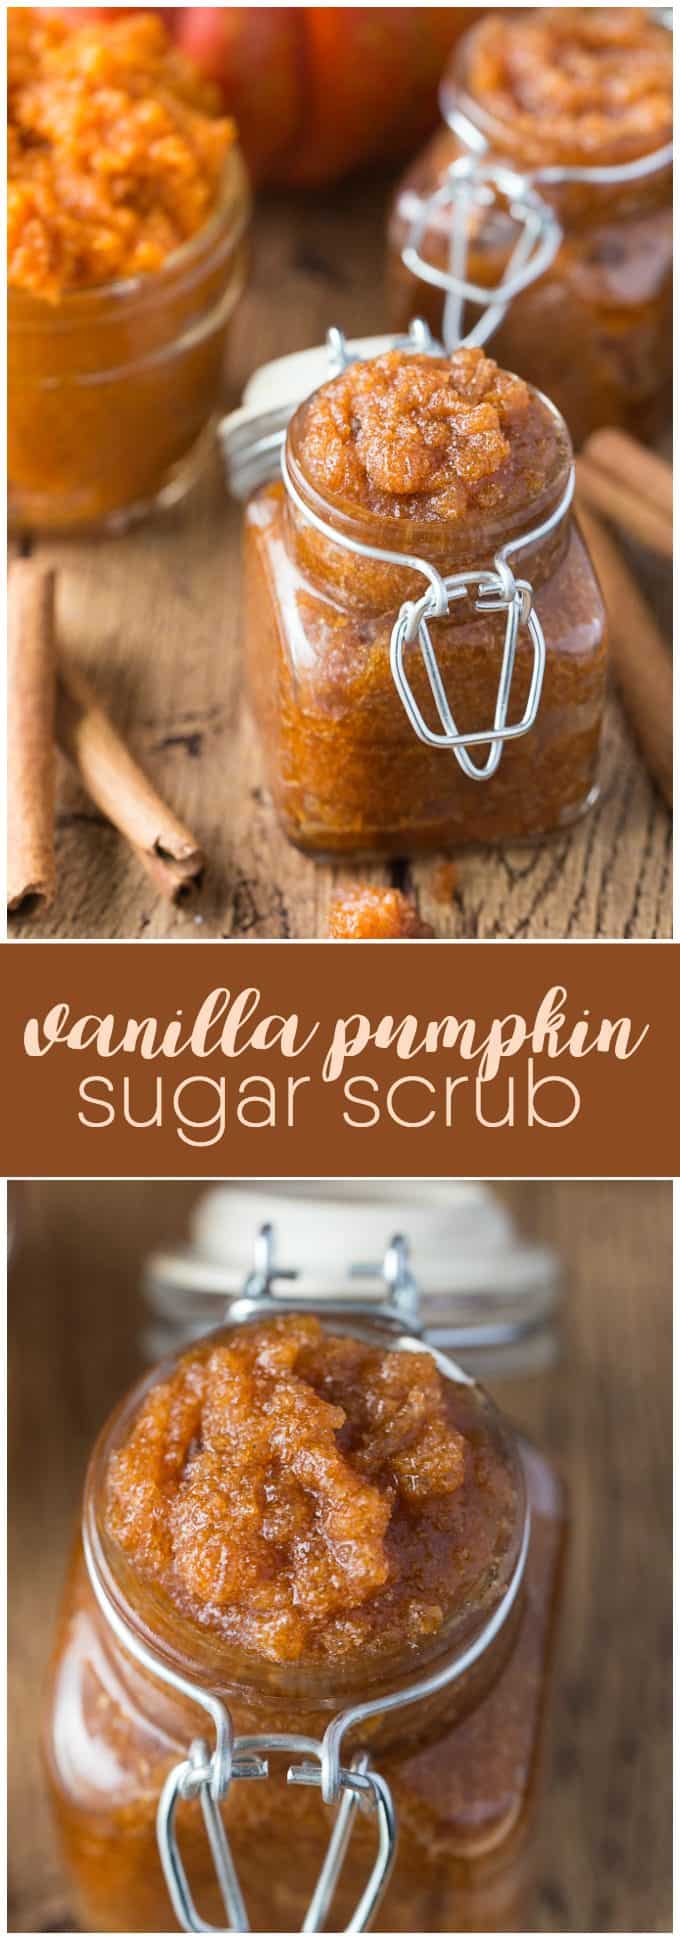 Vanilla Pumpkin Sugar Scrub - Got leftover pumpkin? Make this simple and sweet DIY beauty scrub. It feels great on your skin for exfoliating.